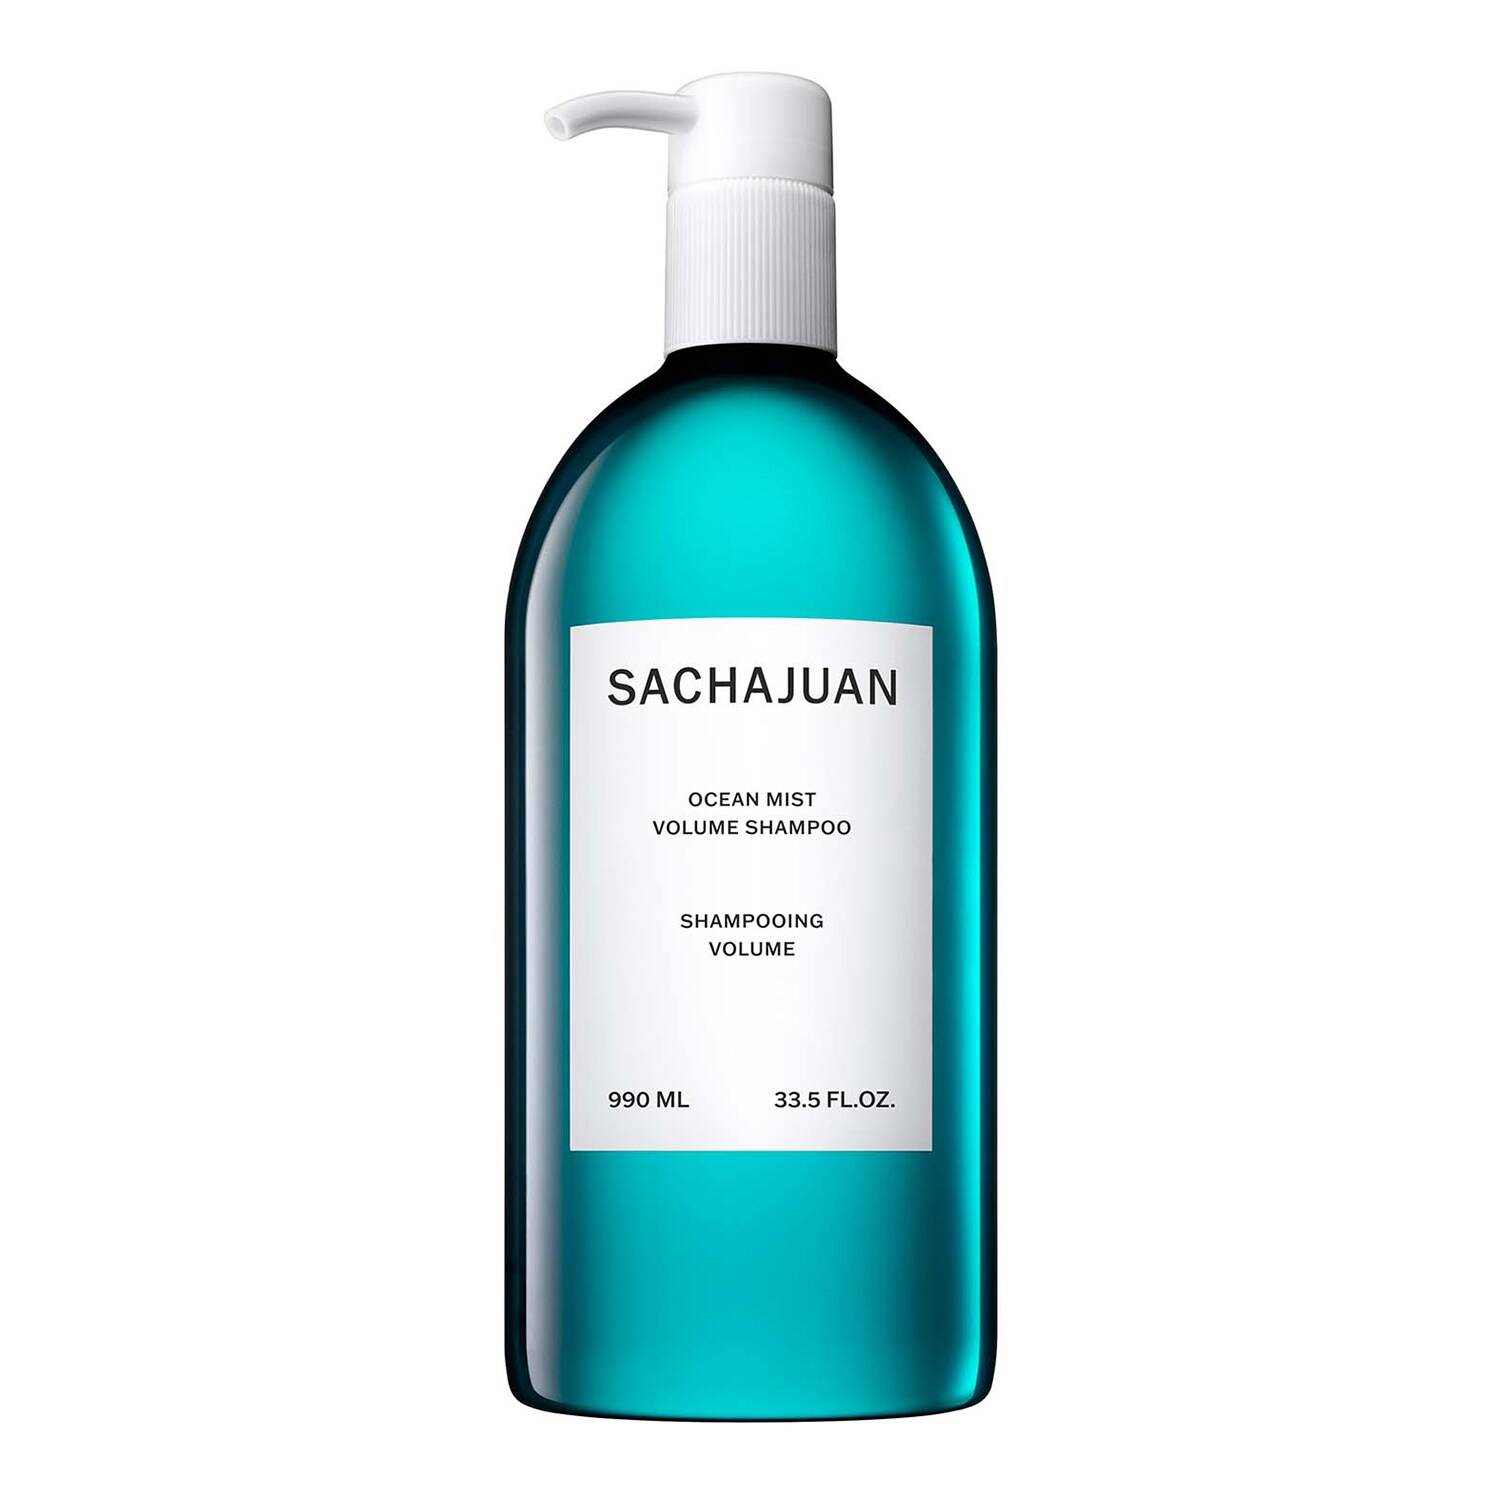 Sachajuan Ocean Mist Volume Shampoo 990Ml